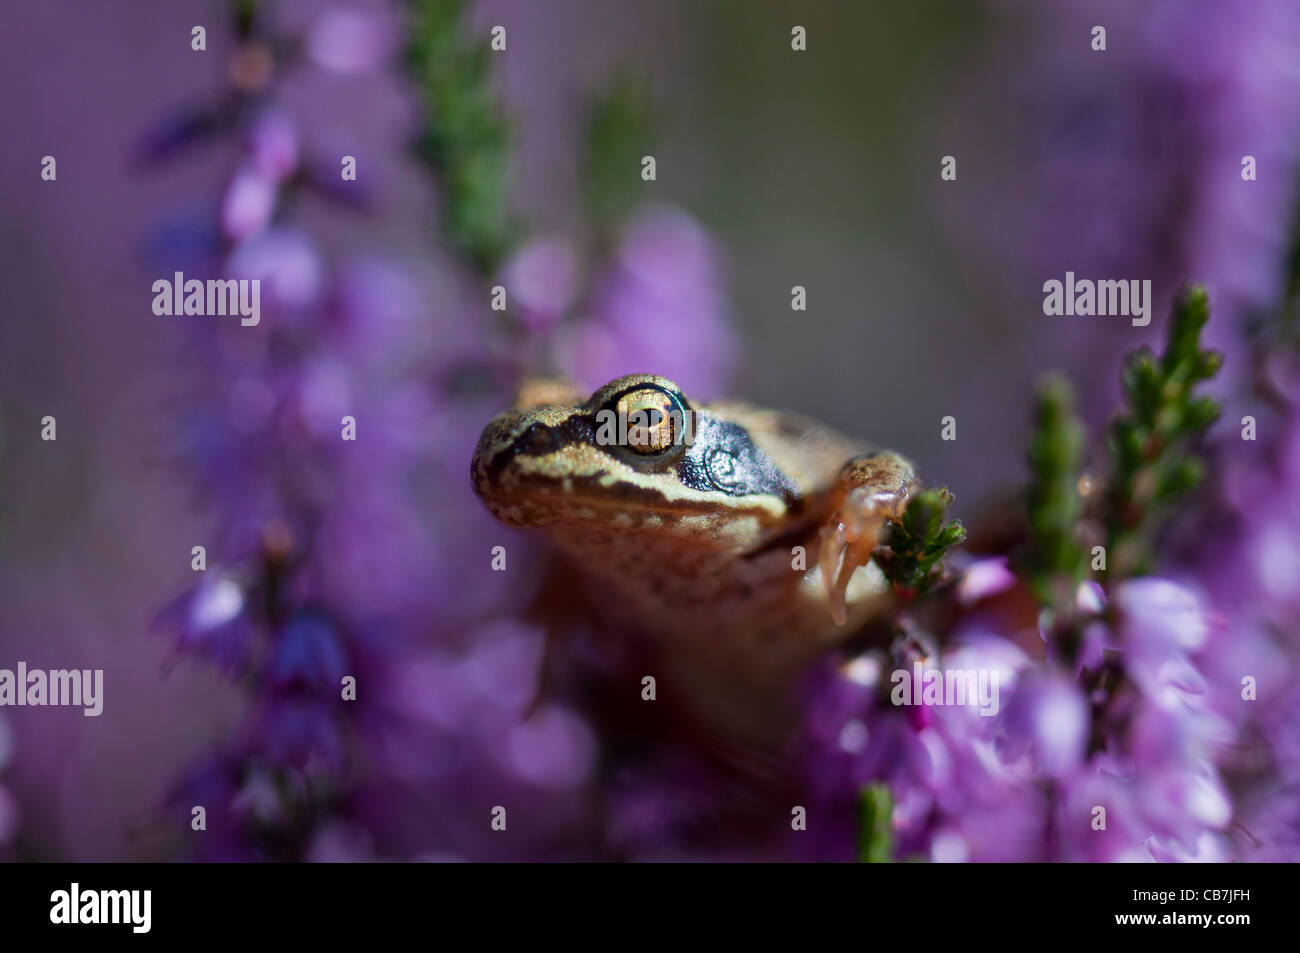 A frog sitting amongst purple flowers Stock Photo